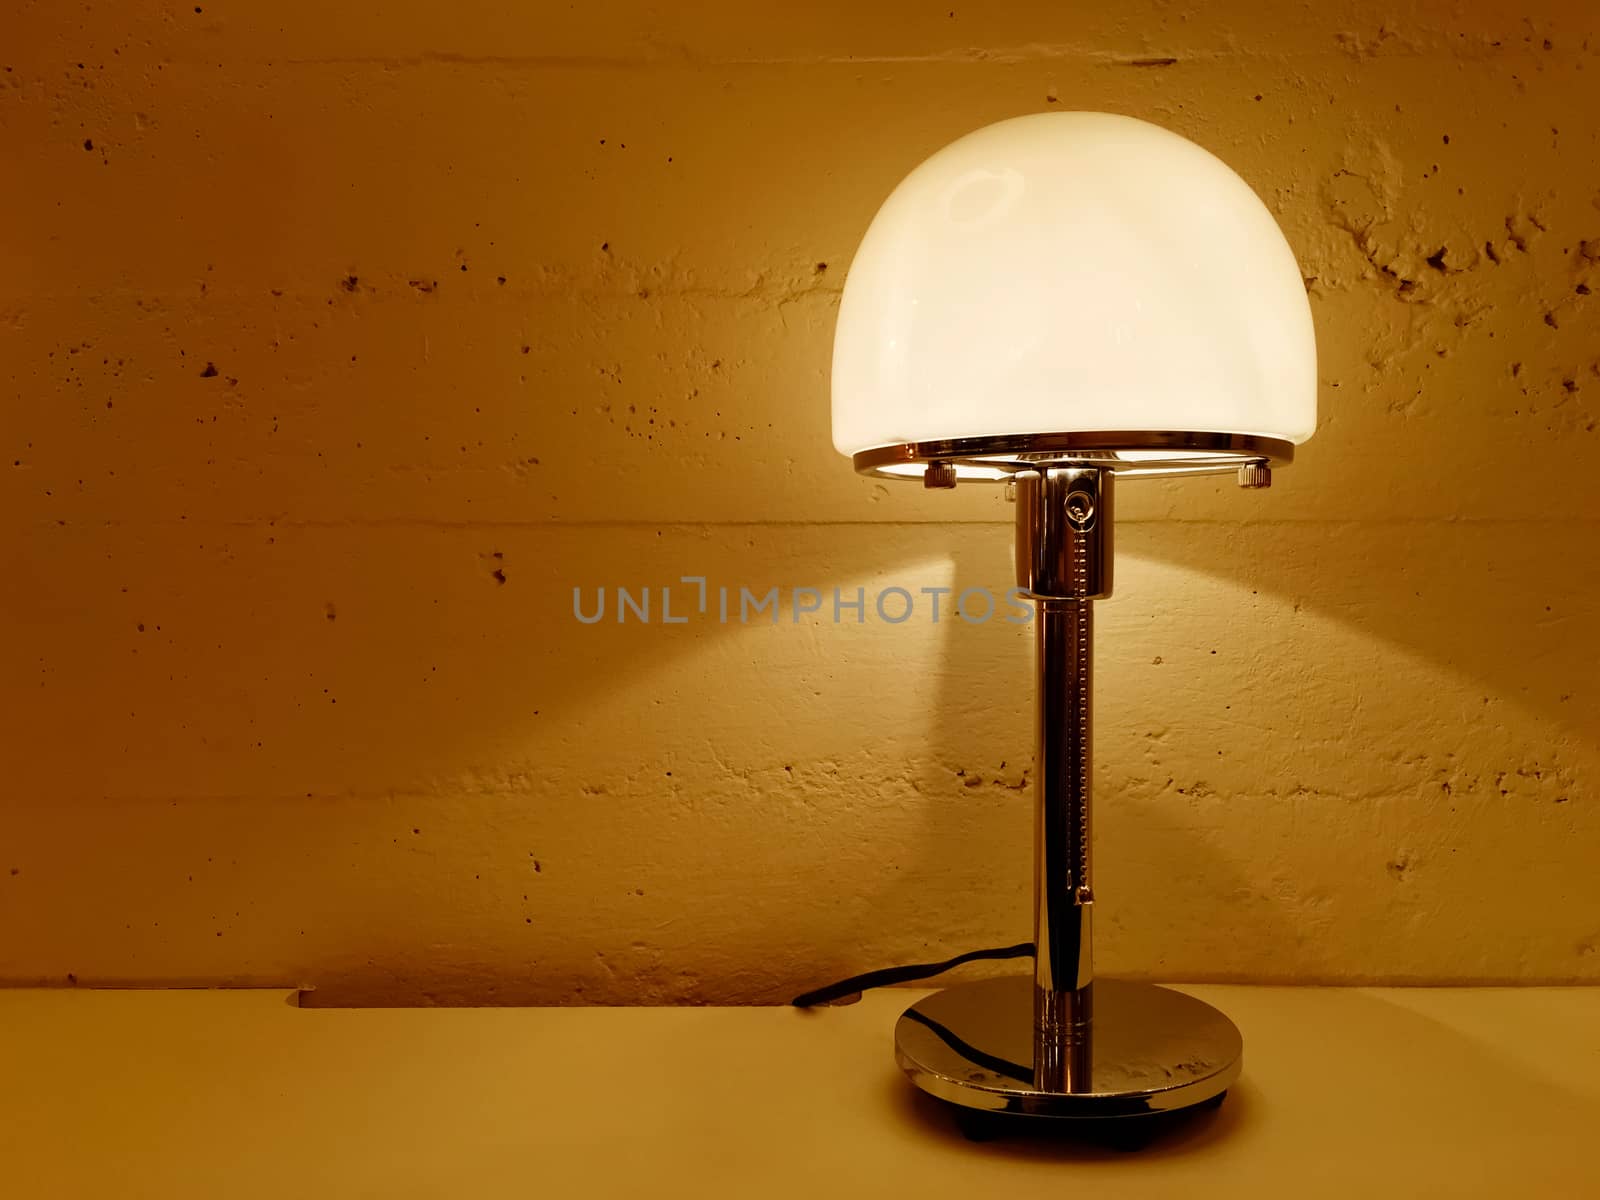 Table lamp giving warm orange light by anikasalsera